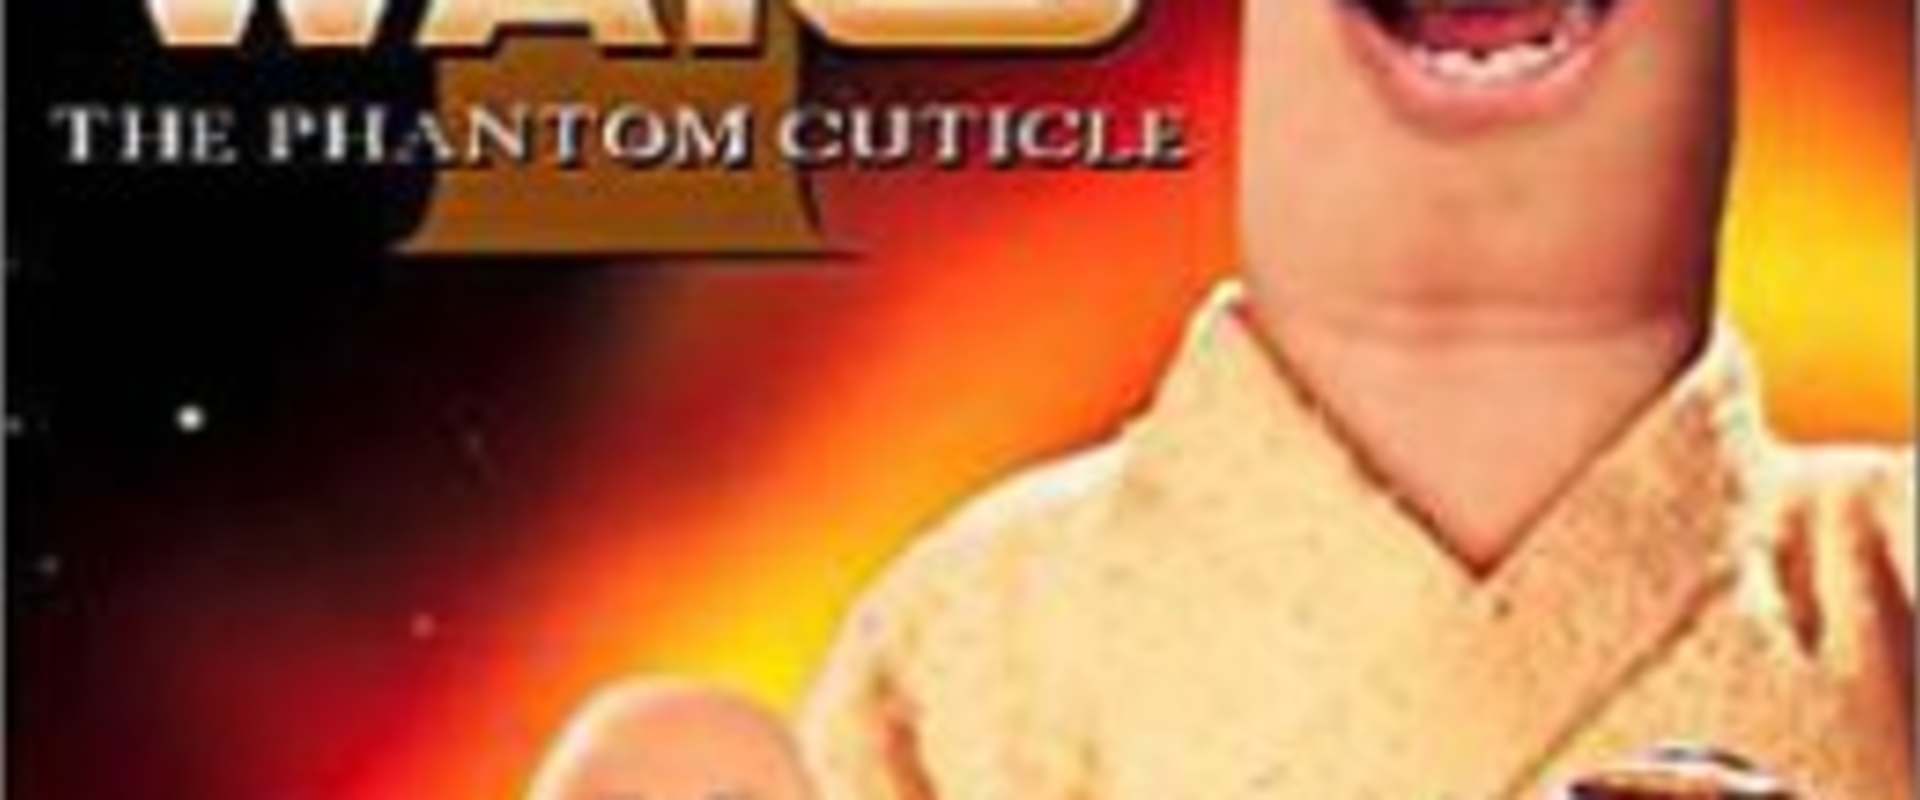 Thumb Wars: The Phantom Cuticle background 2